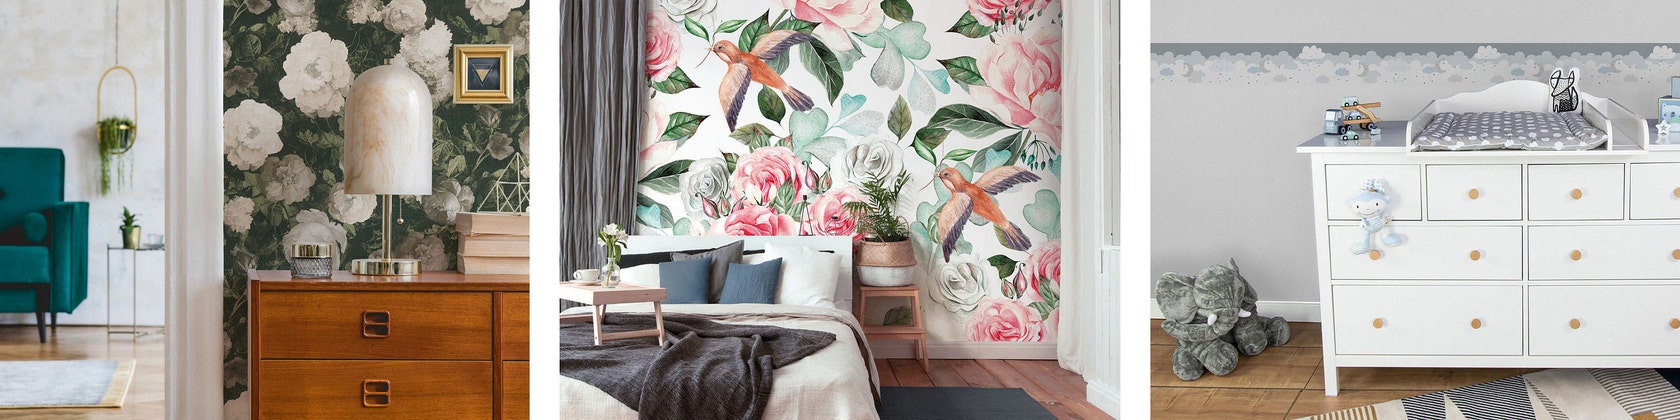 Bfdi Fabric, Wallpaper and Home Decor